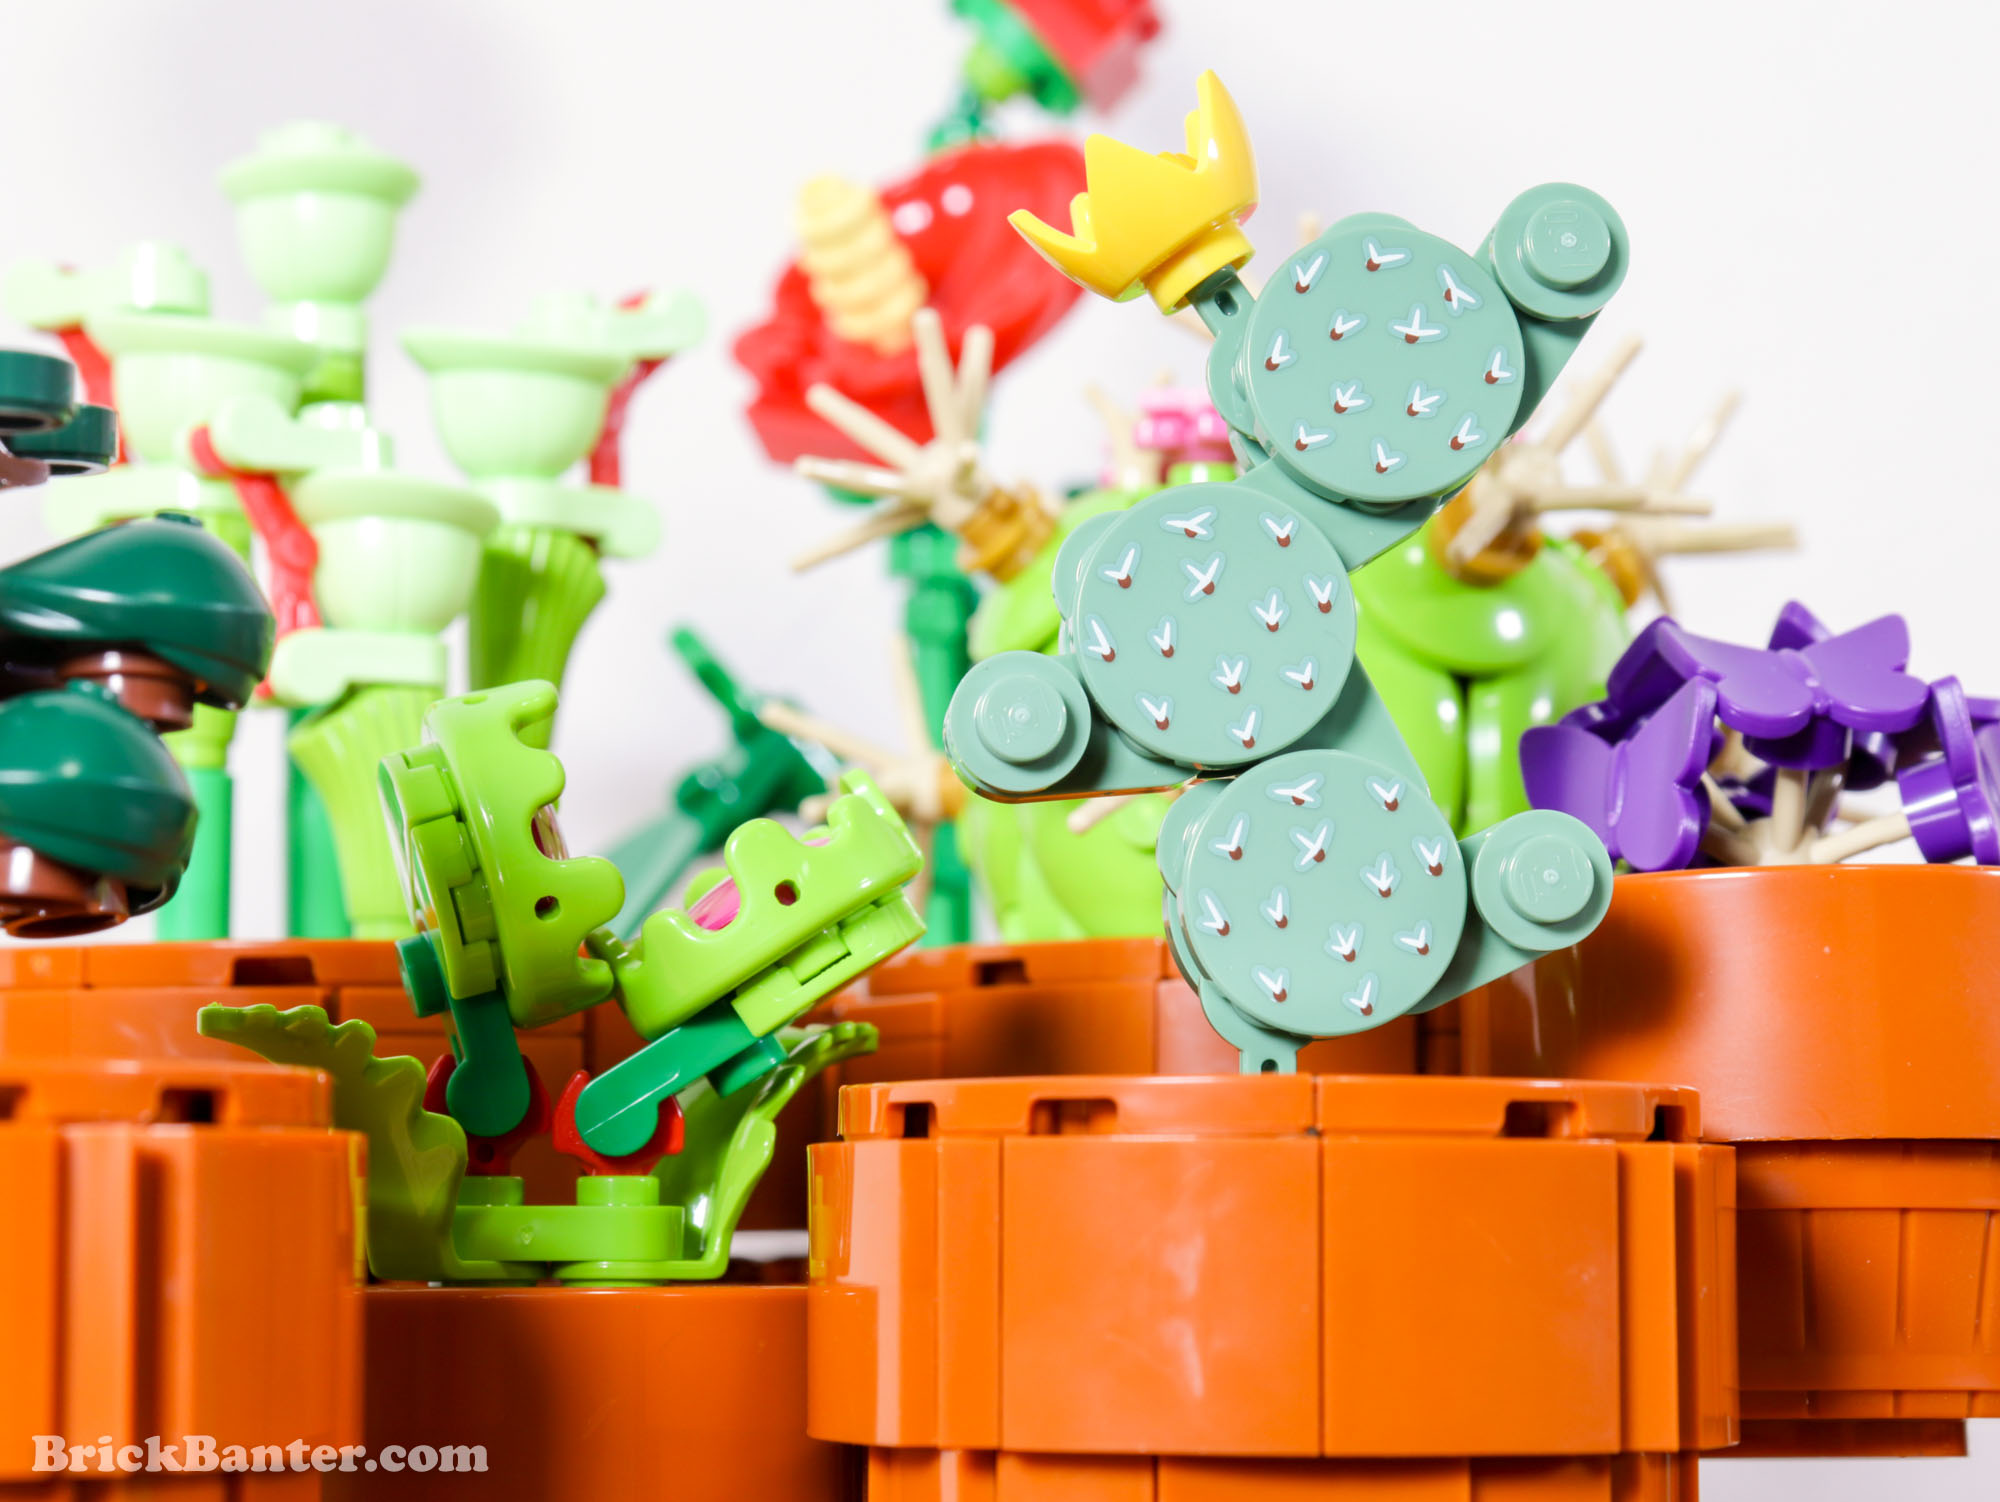 LEGO reveals LEGO Botanical Collection 10329 Tiny Plants [News